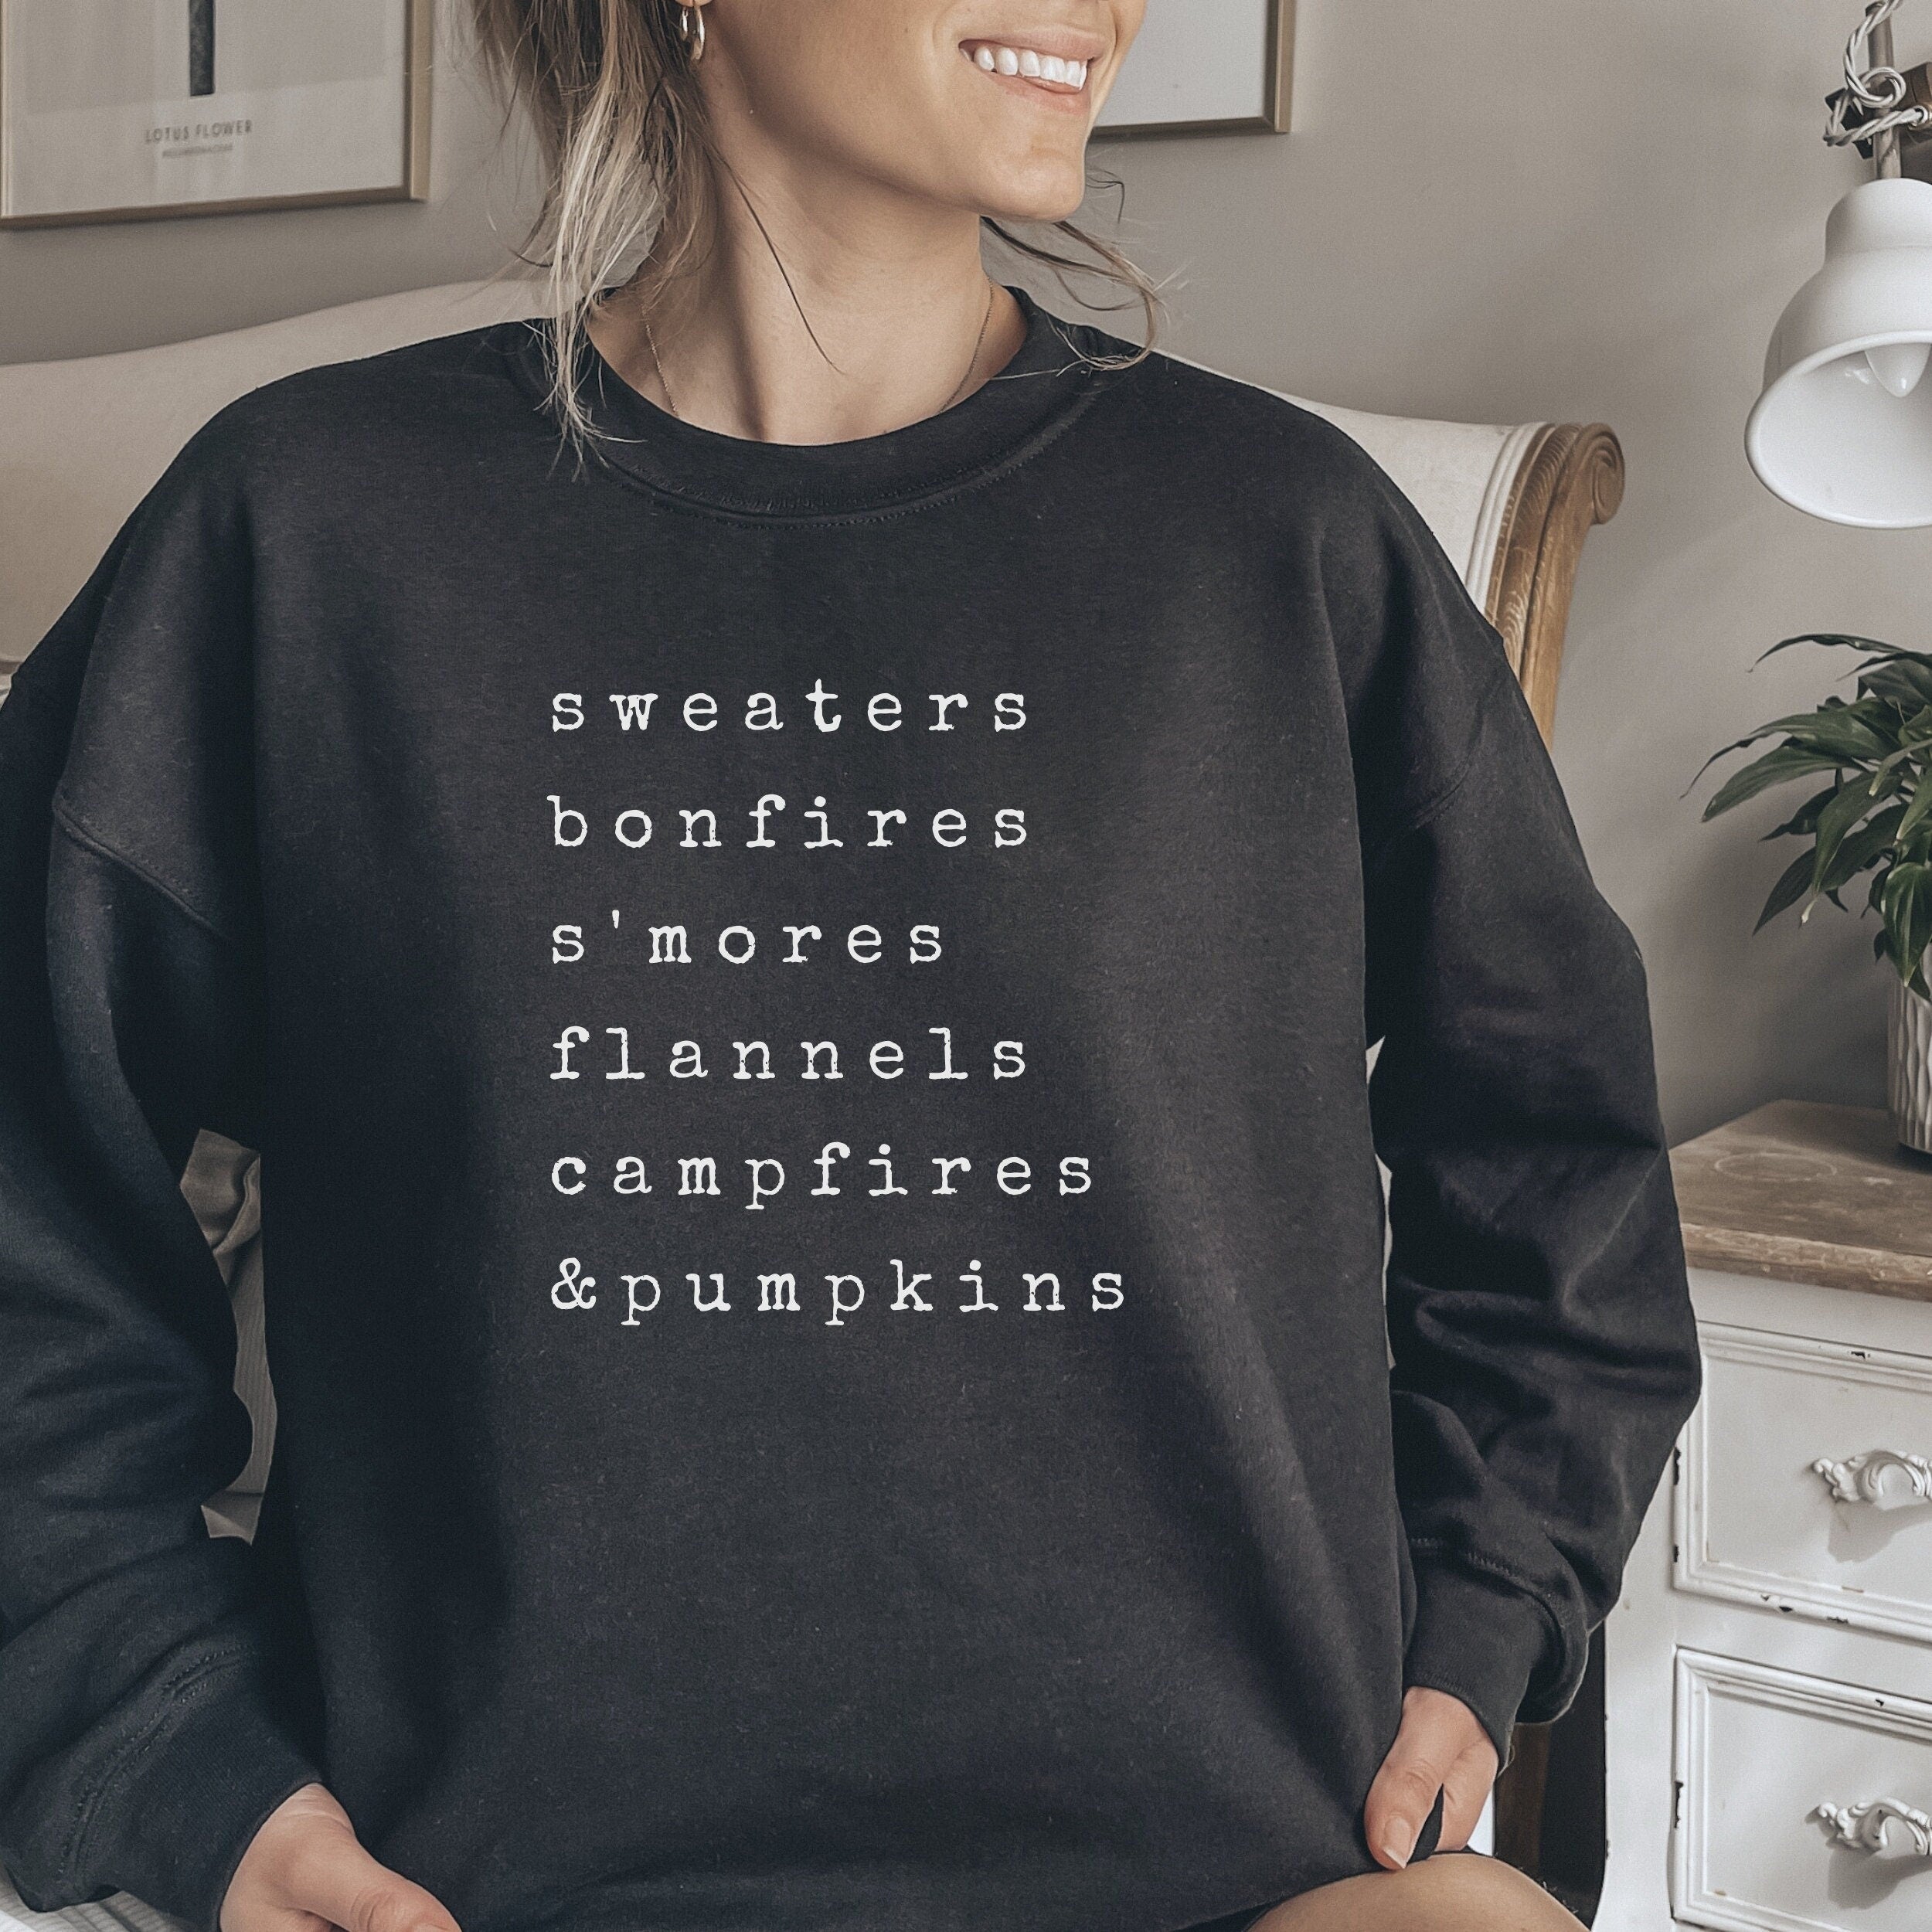 Fall Essentials Sweatshirt